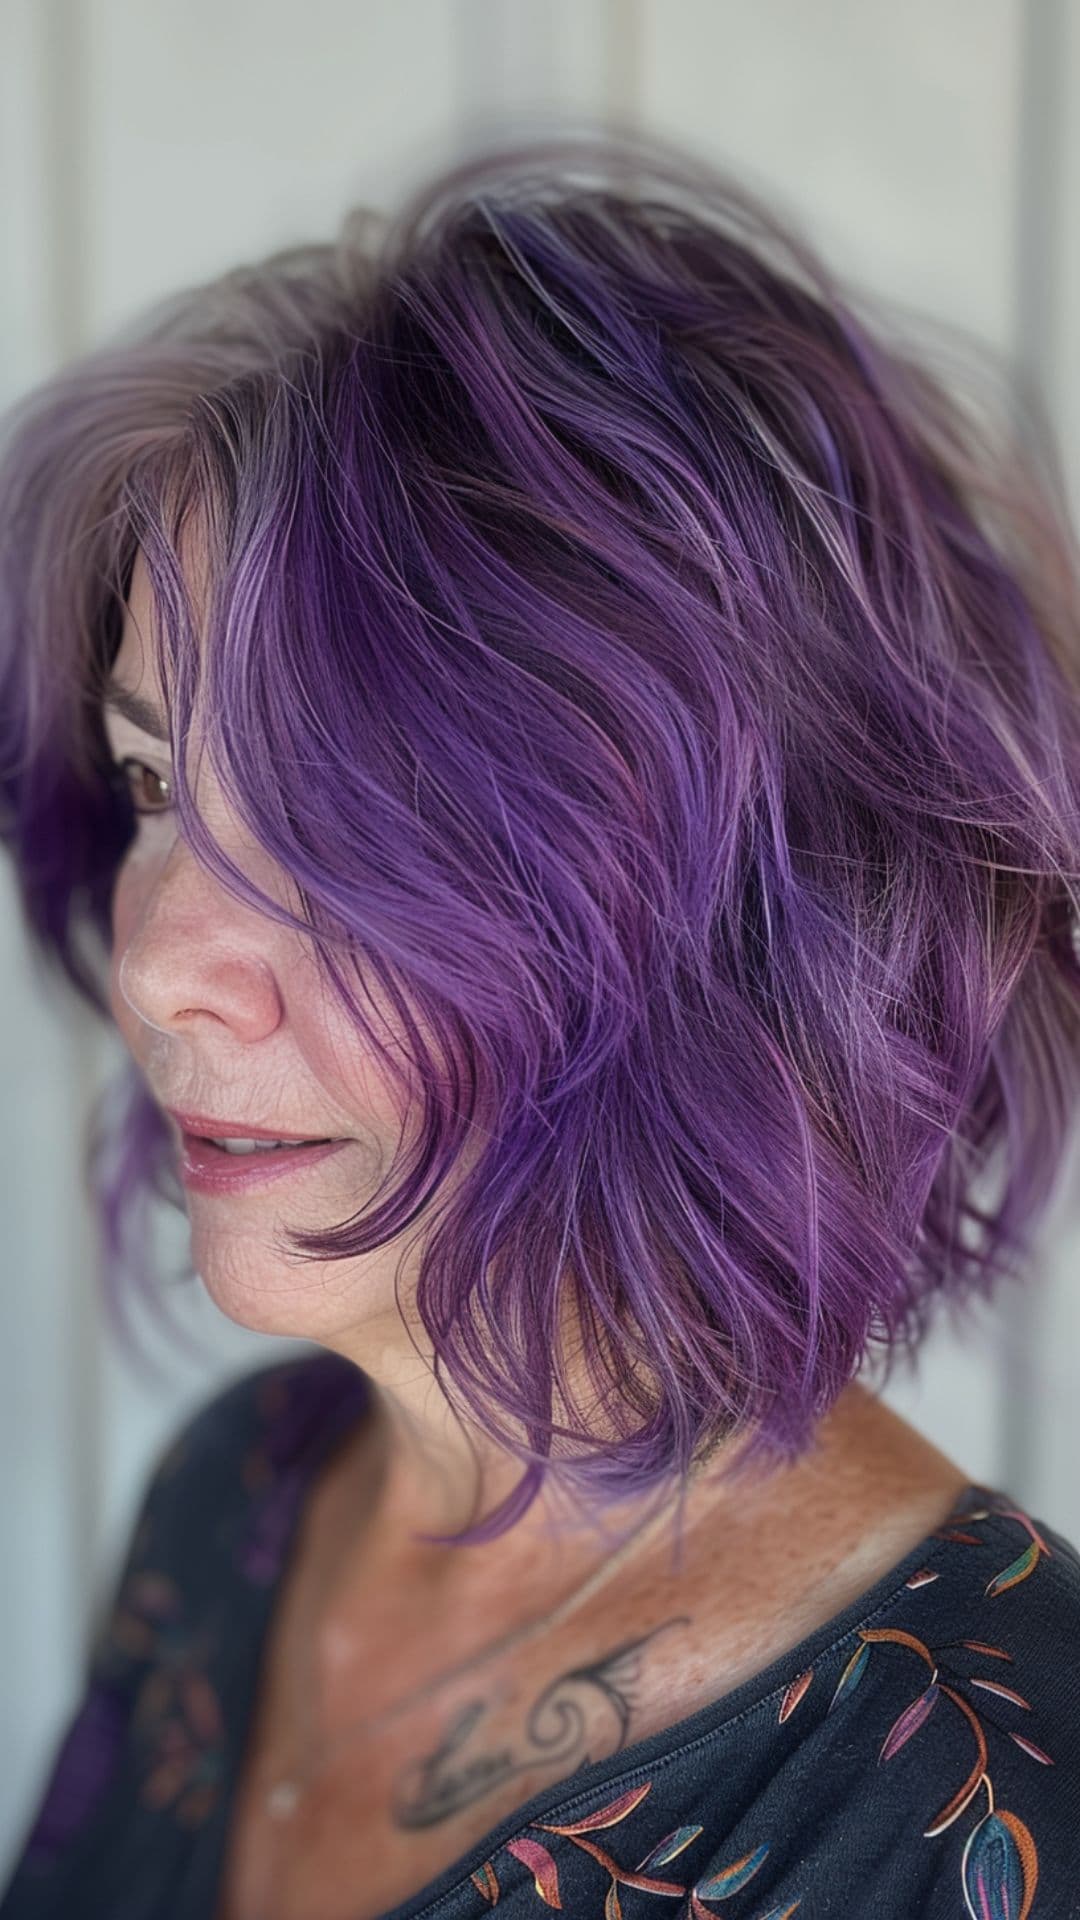 An old woman modelling an a-line choppy shaggy bob with purple hair color.